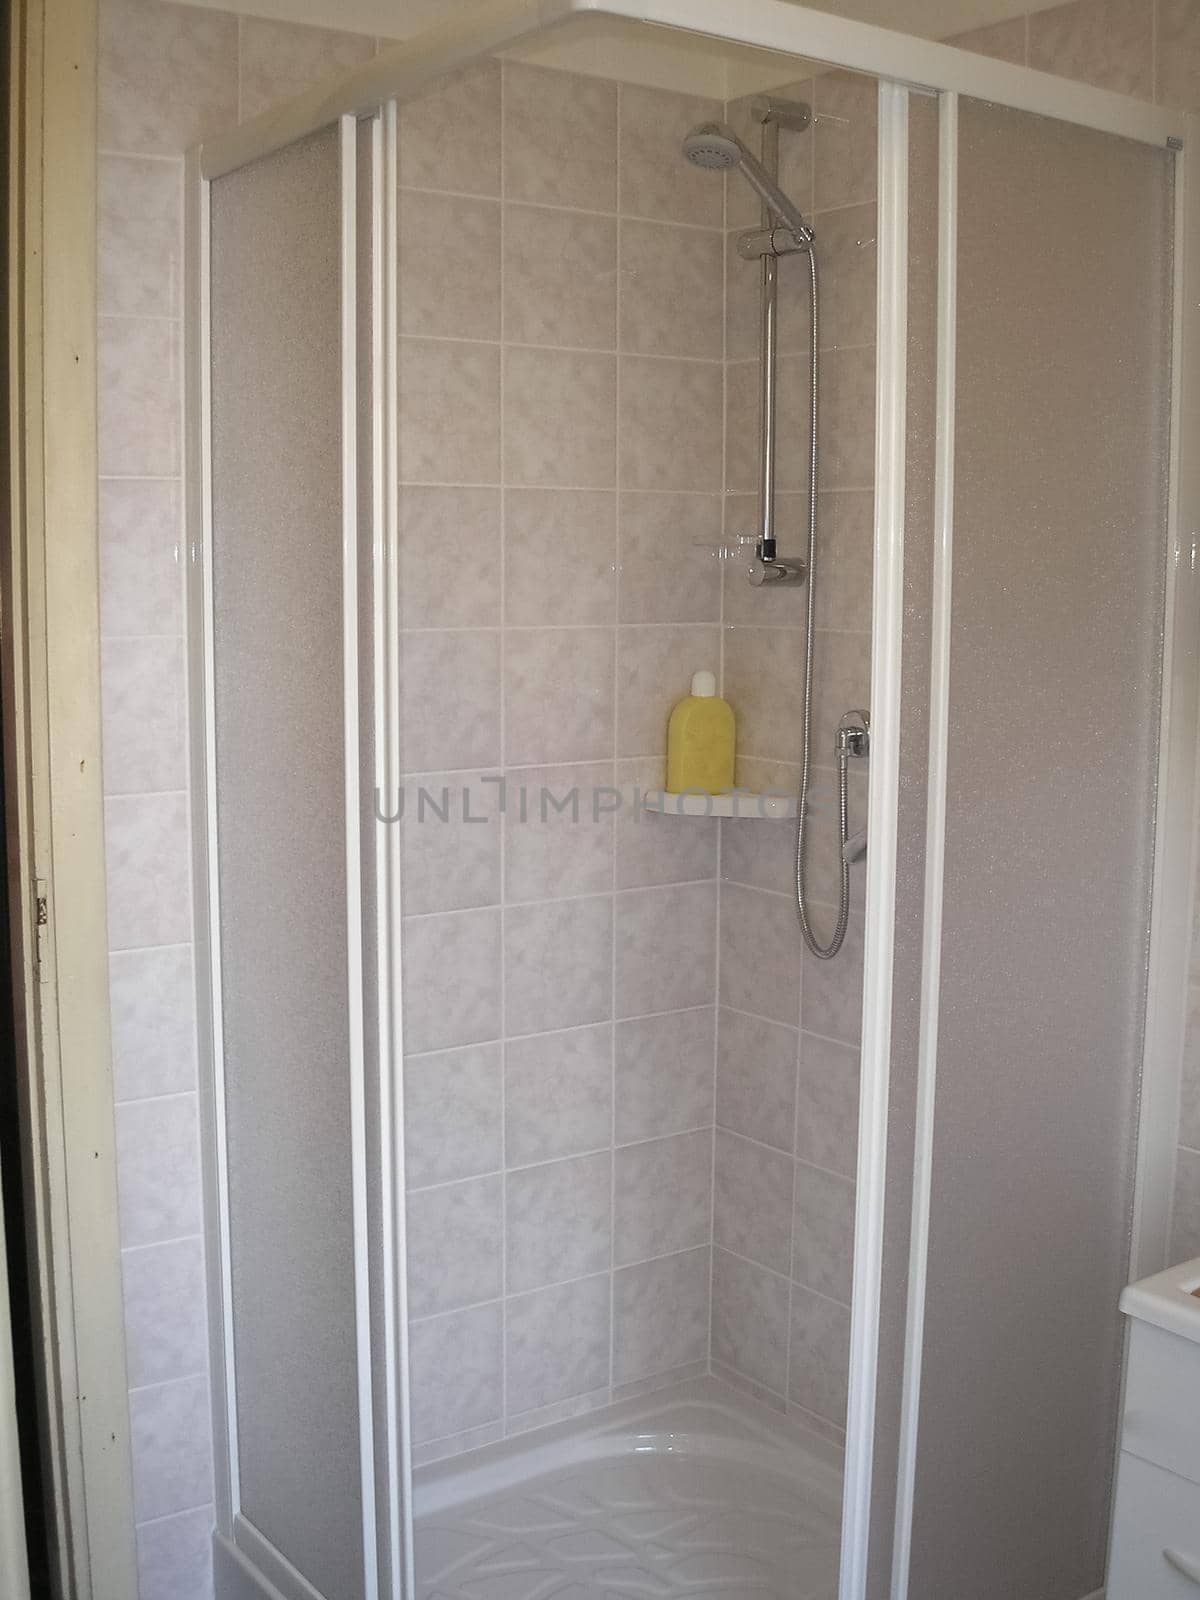 Residential bathroom shower by claudiodivizia